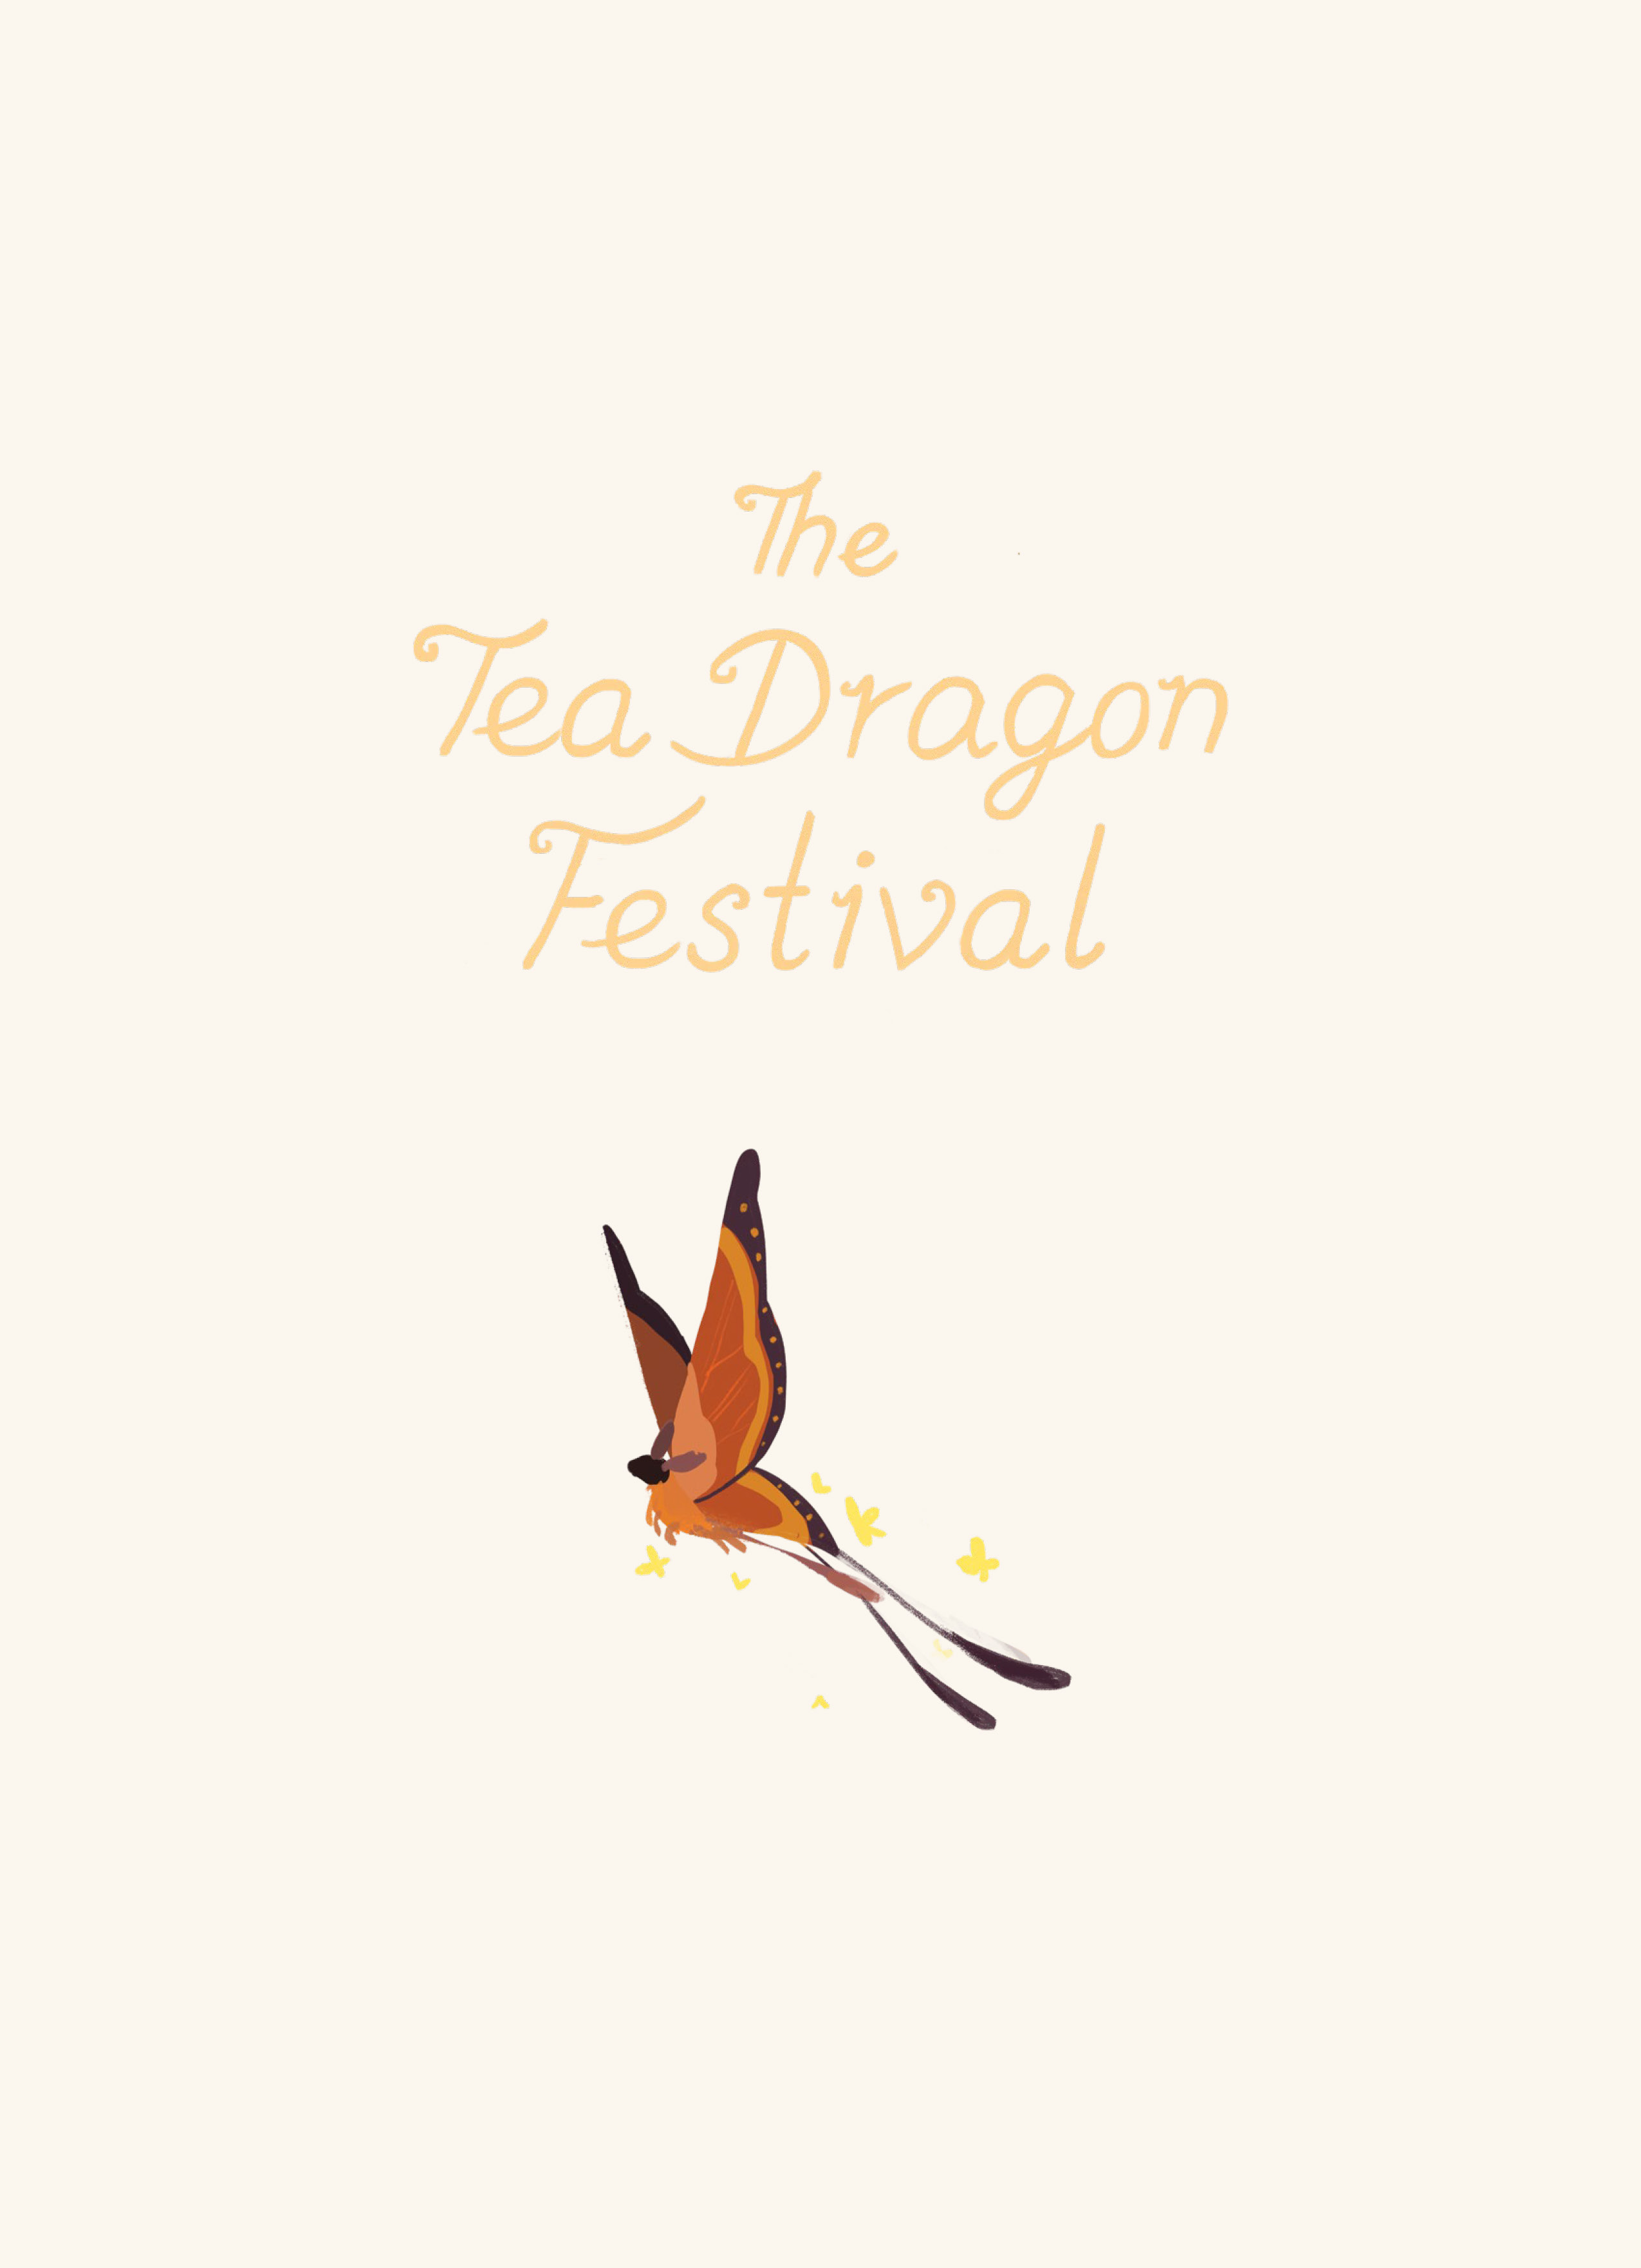 Read online The Tea Dragon Series comic -  Issue # The Tea Dragon Festival - 2